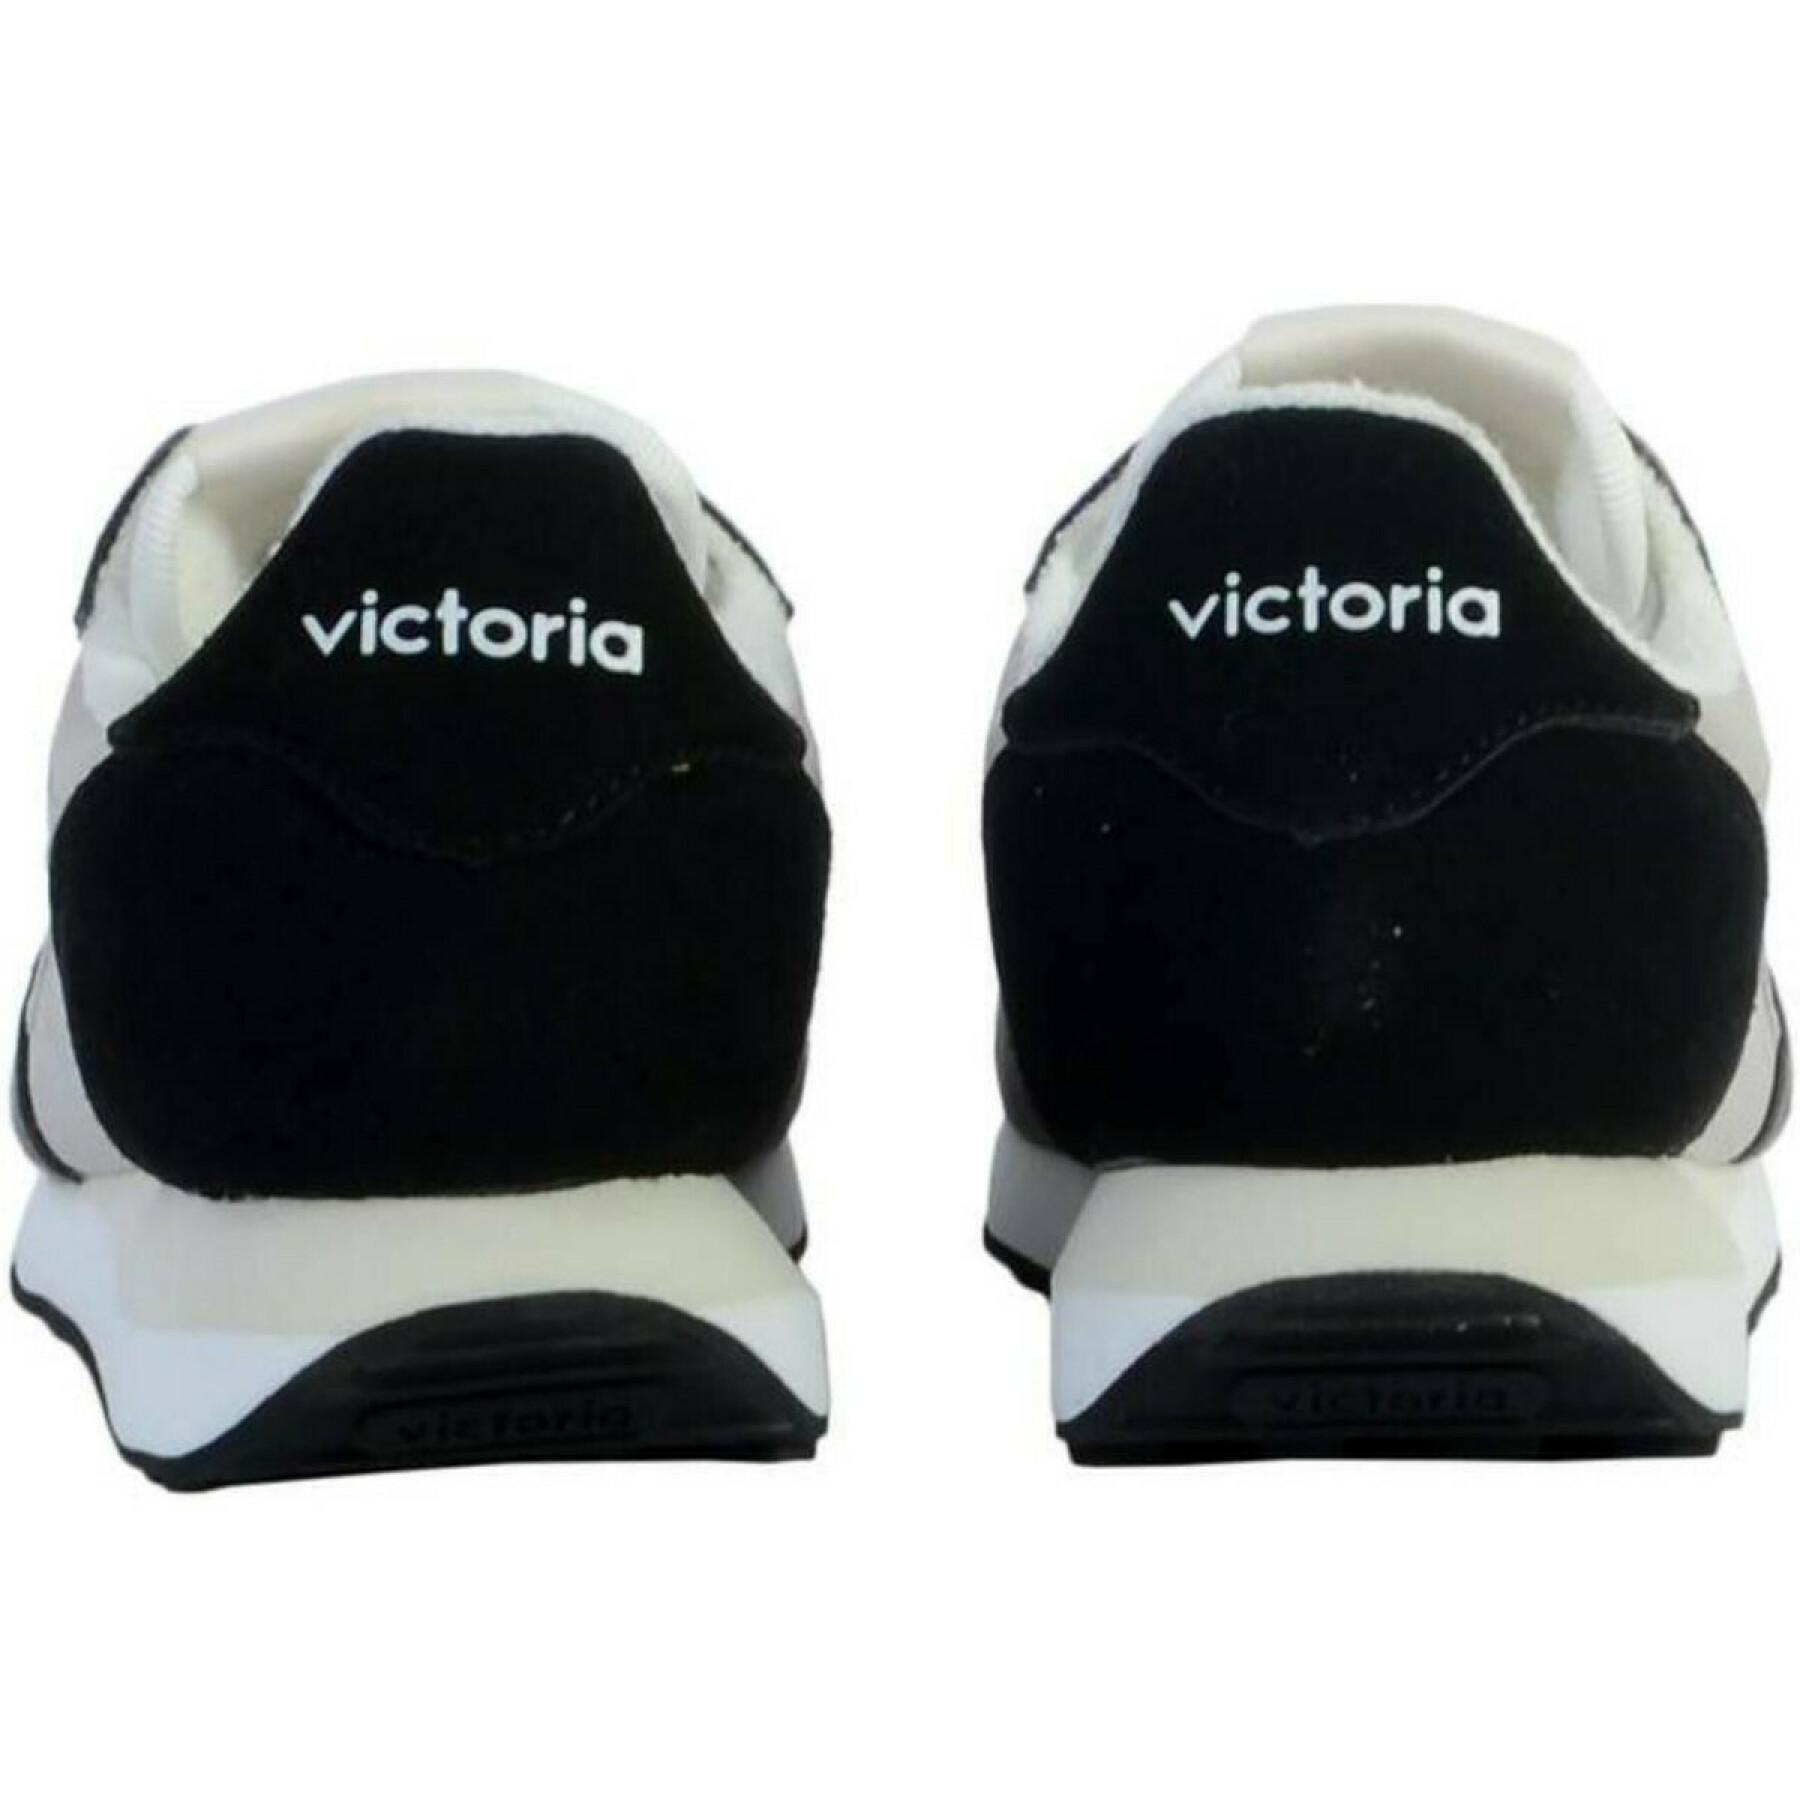 Women's shoes Victoria astro